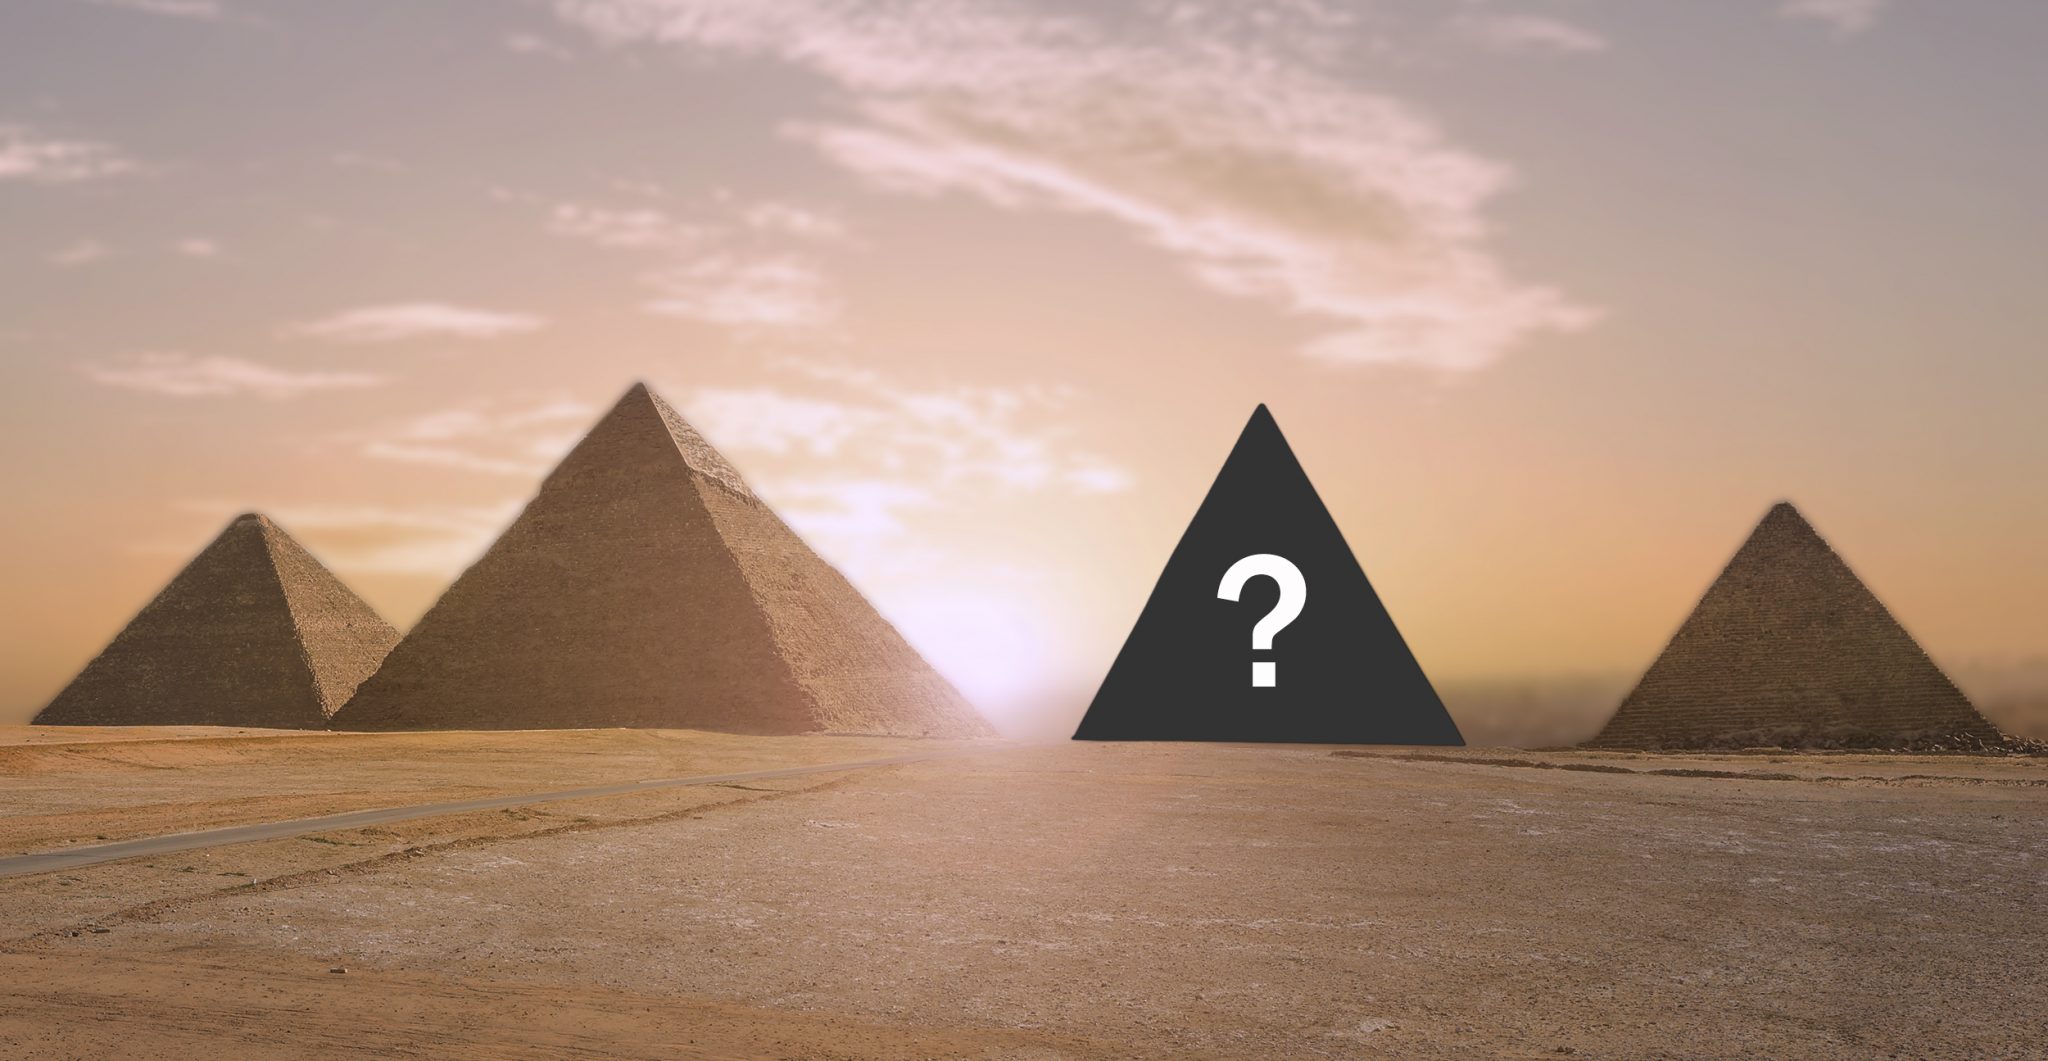 The 4th pyramid?